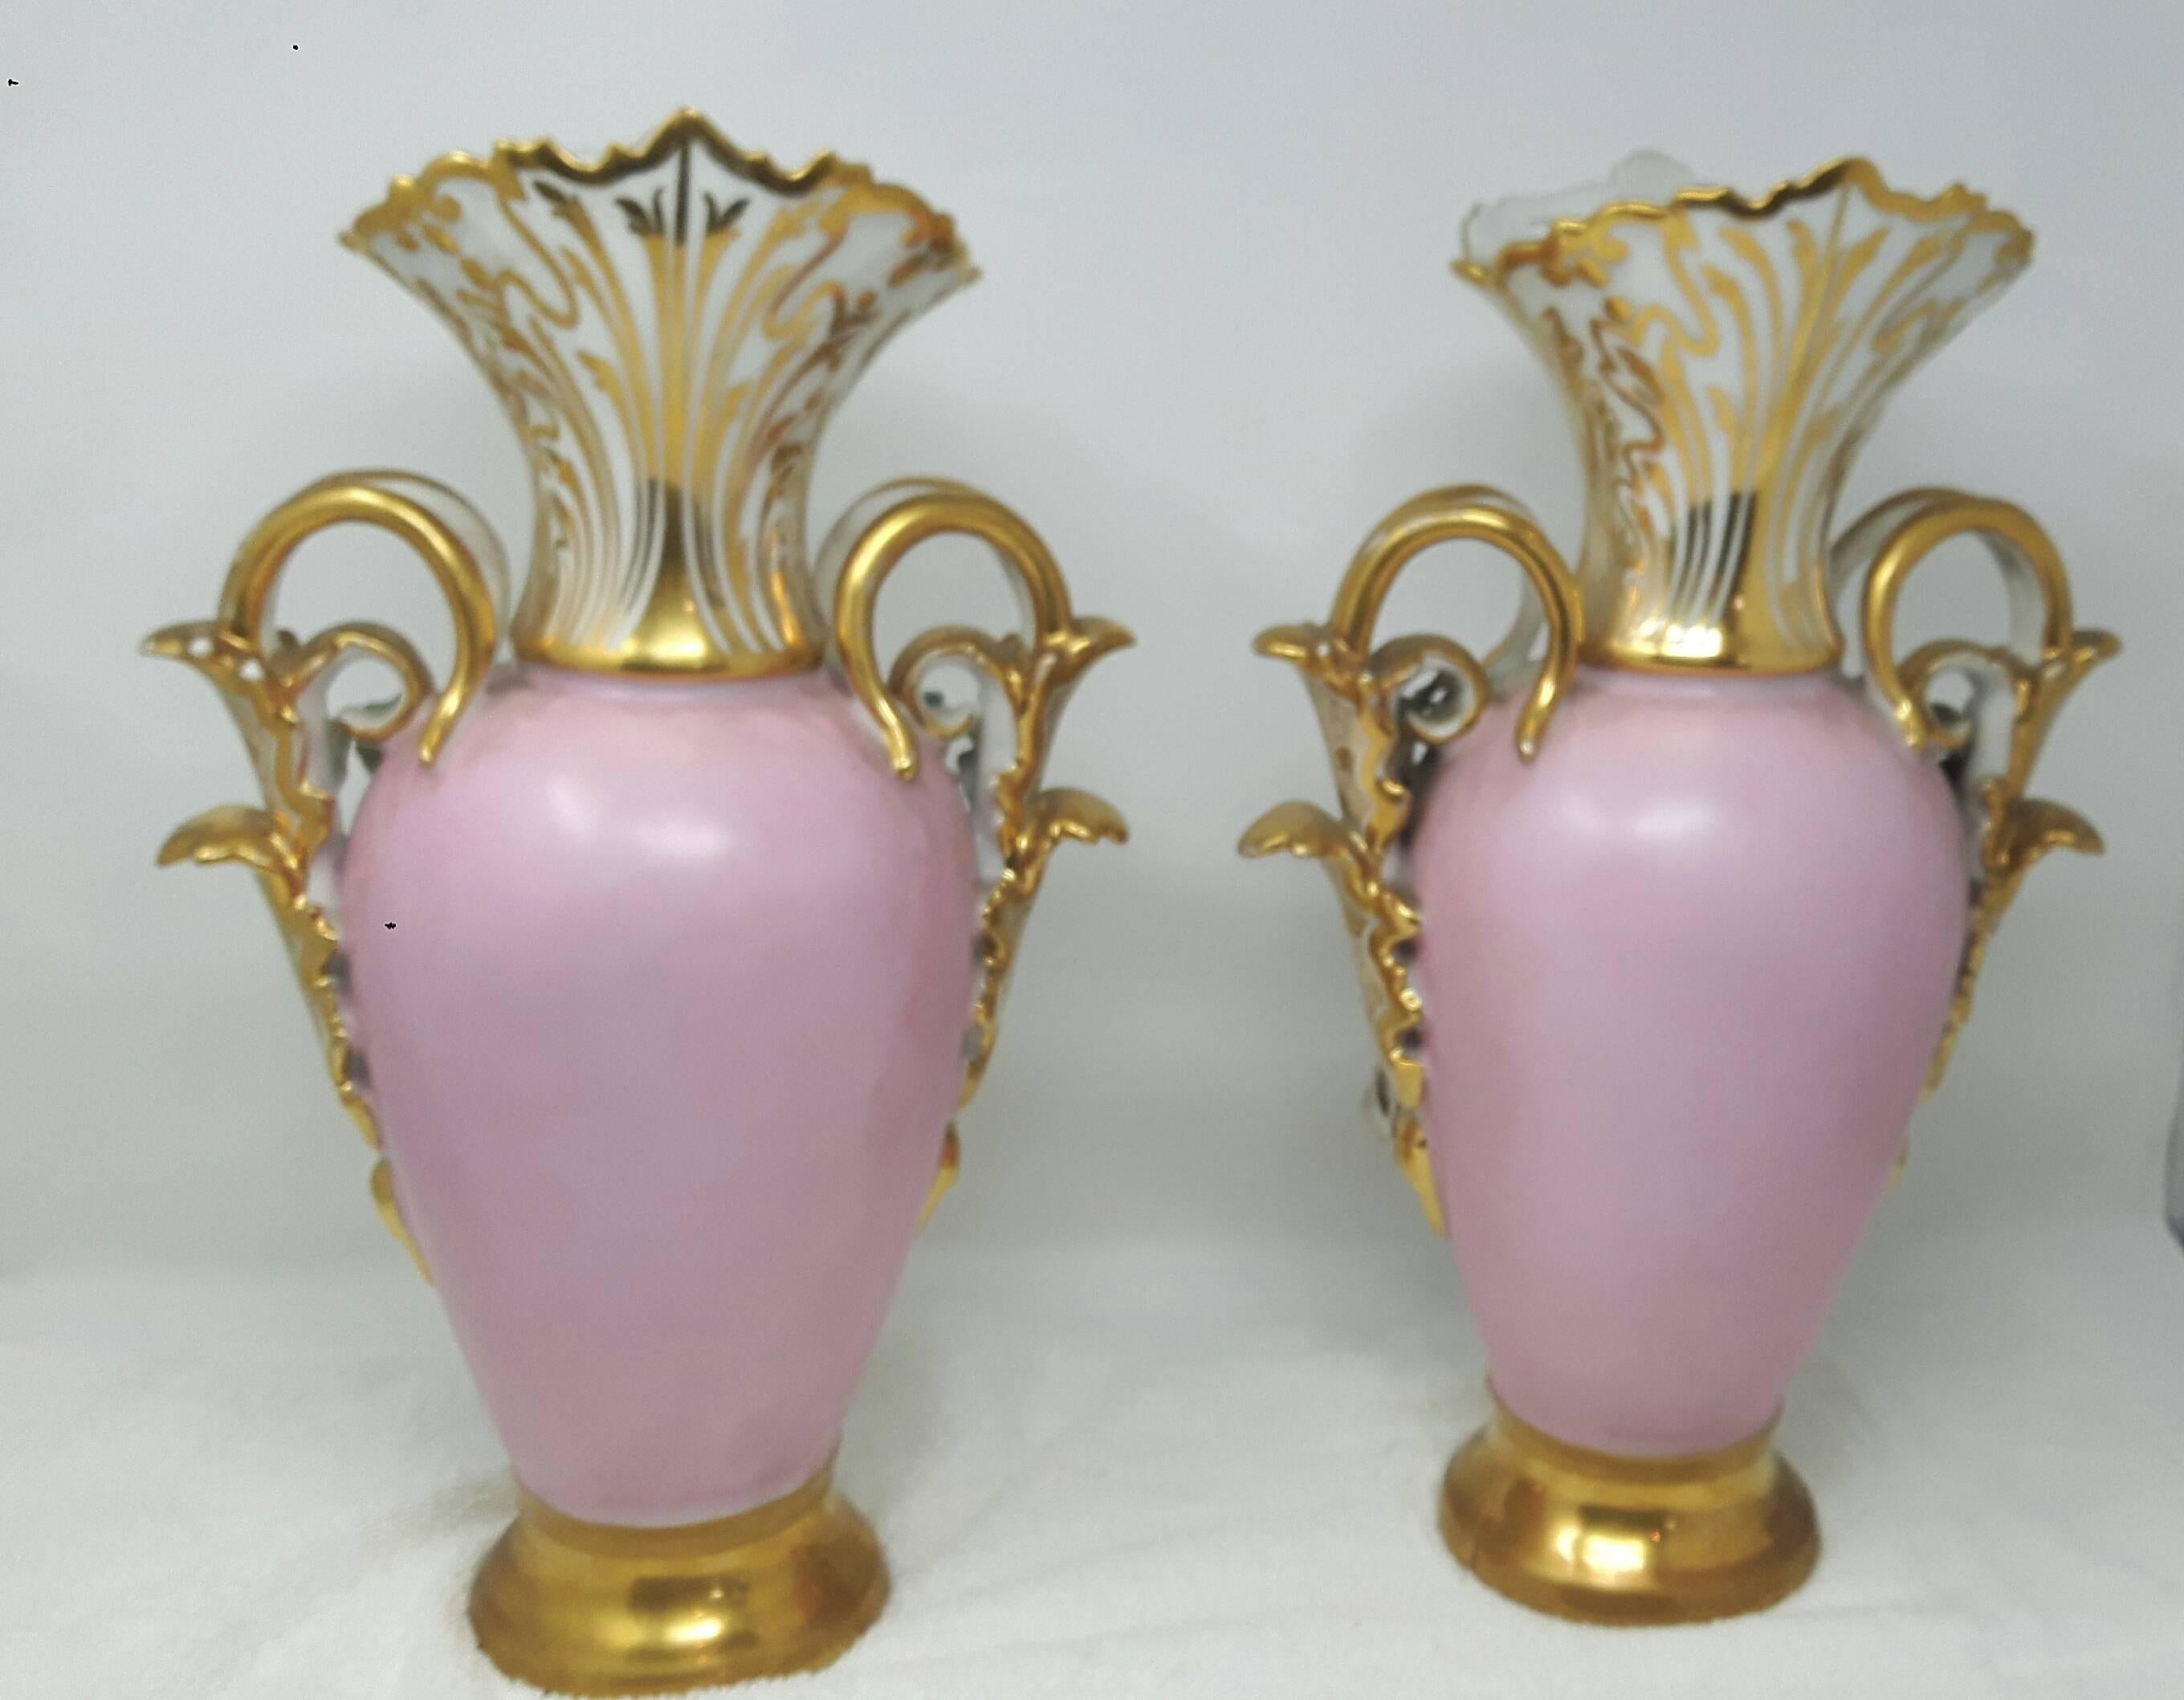 Other Pair of Unusual Pierced Paris Vases For Sale